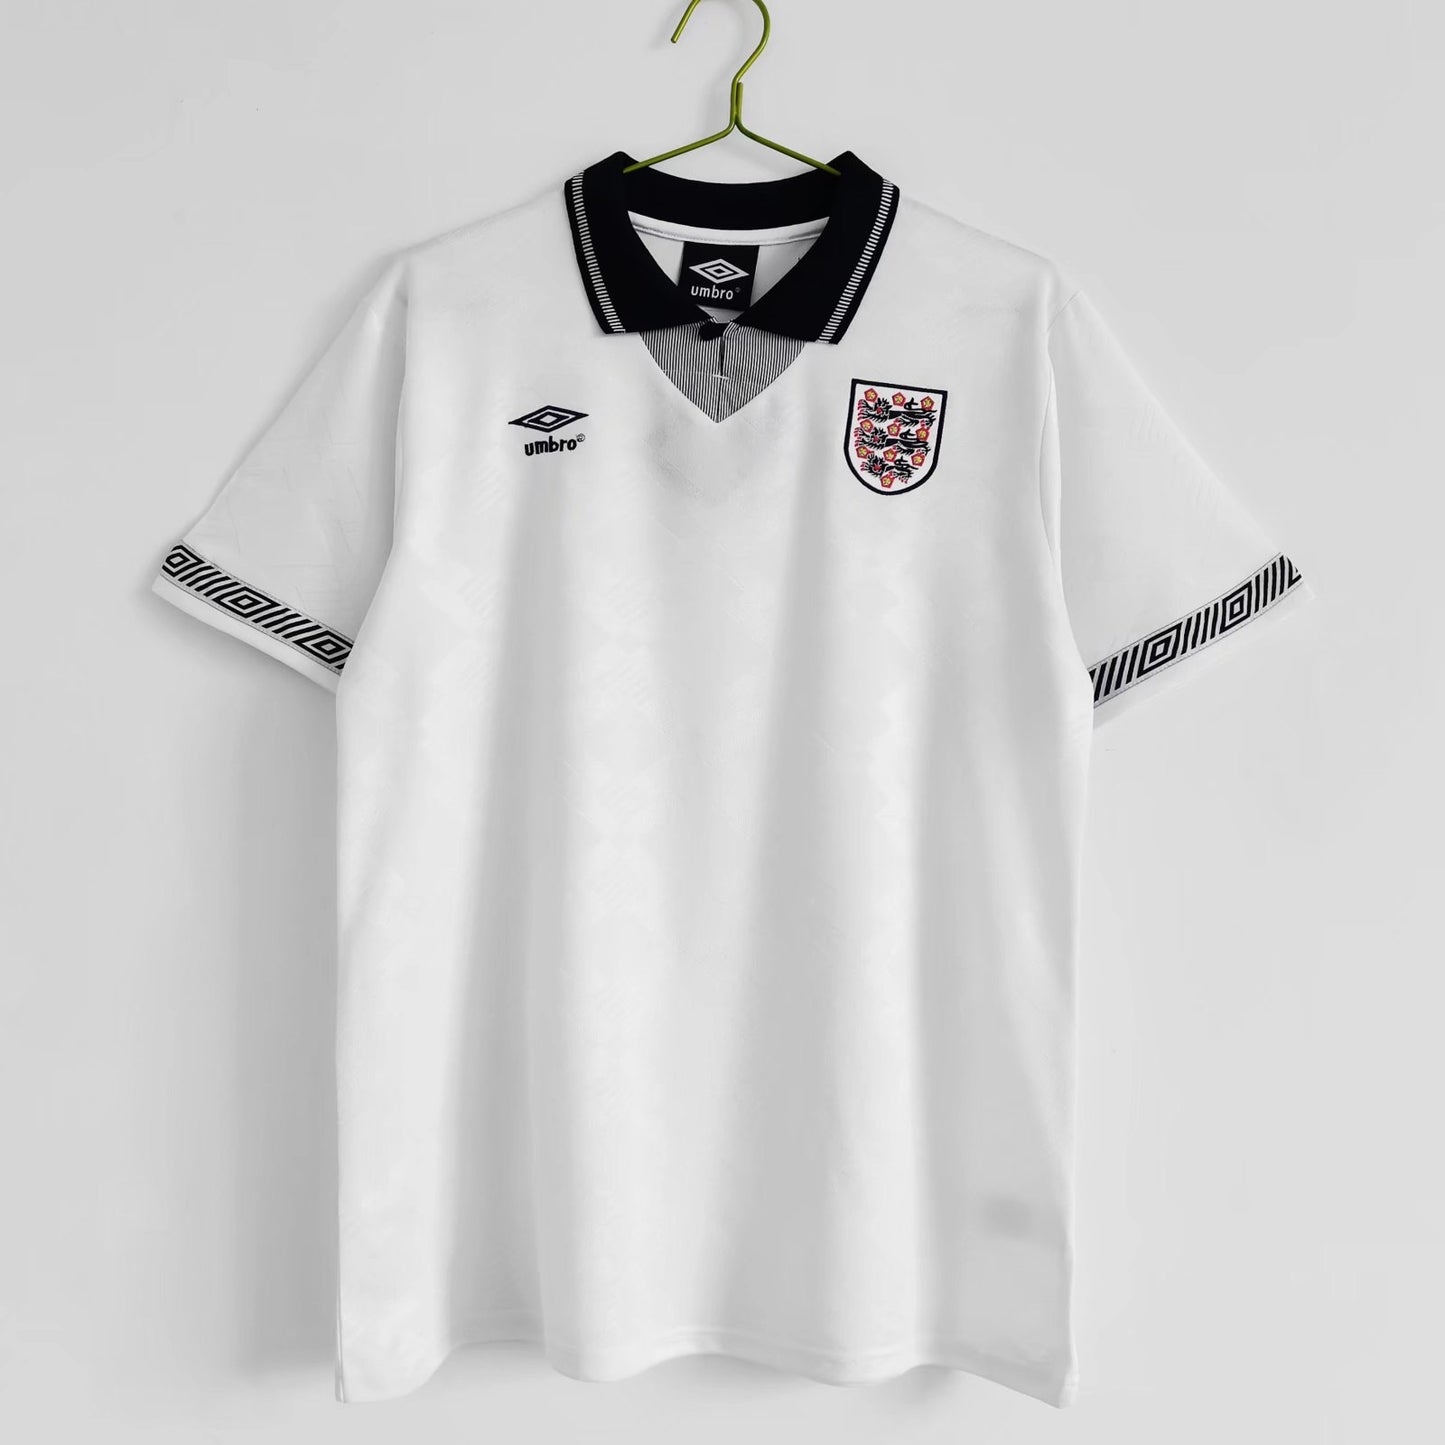 England vintage jersey 1990